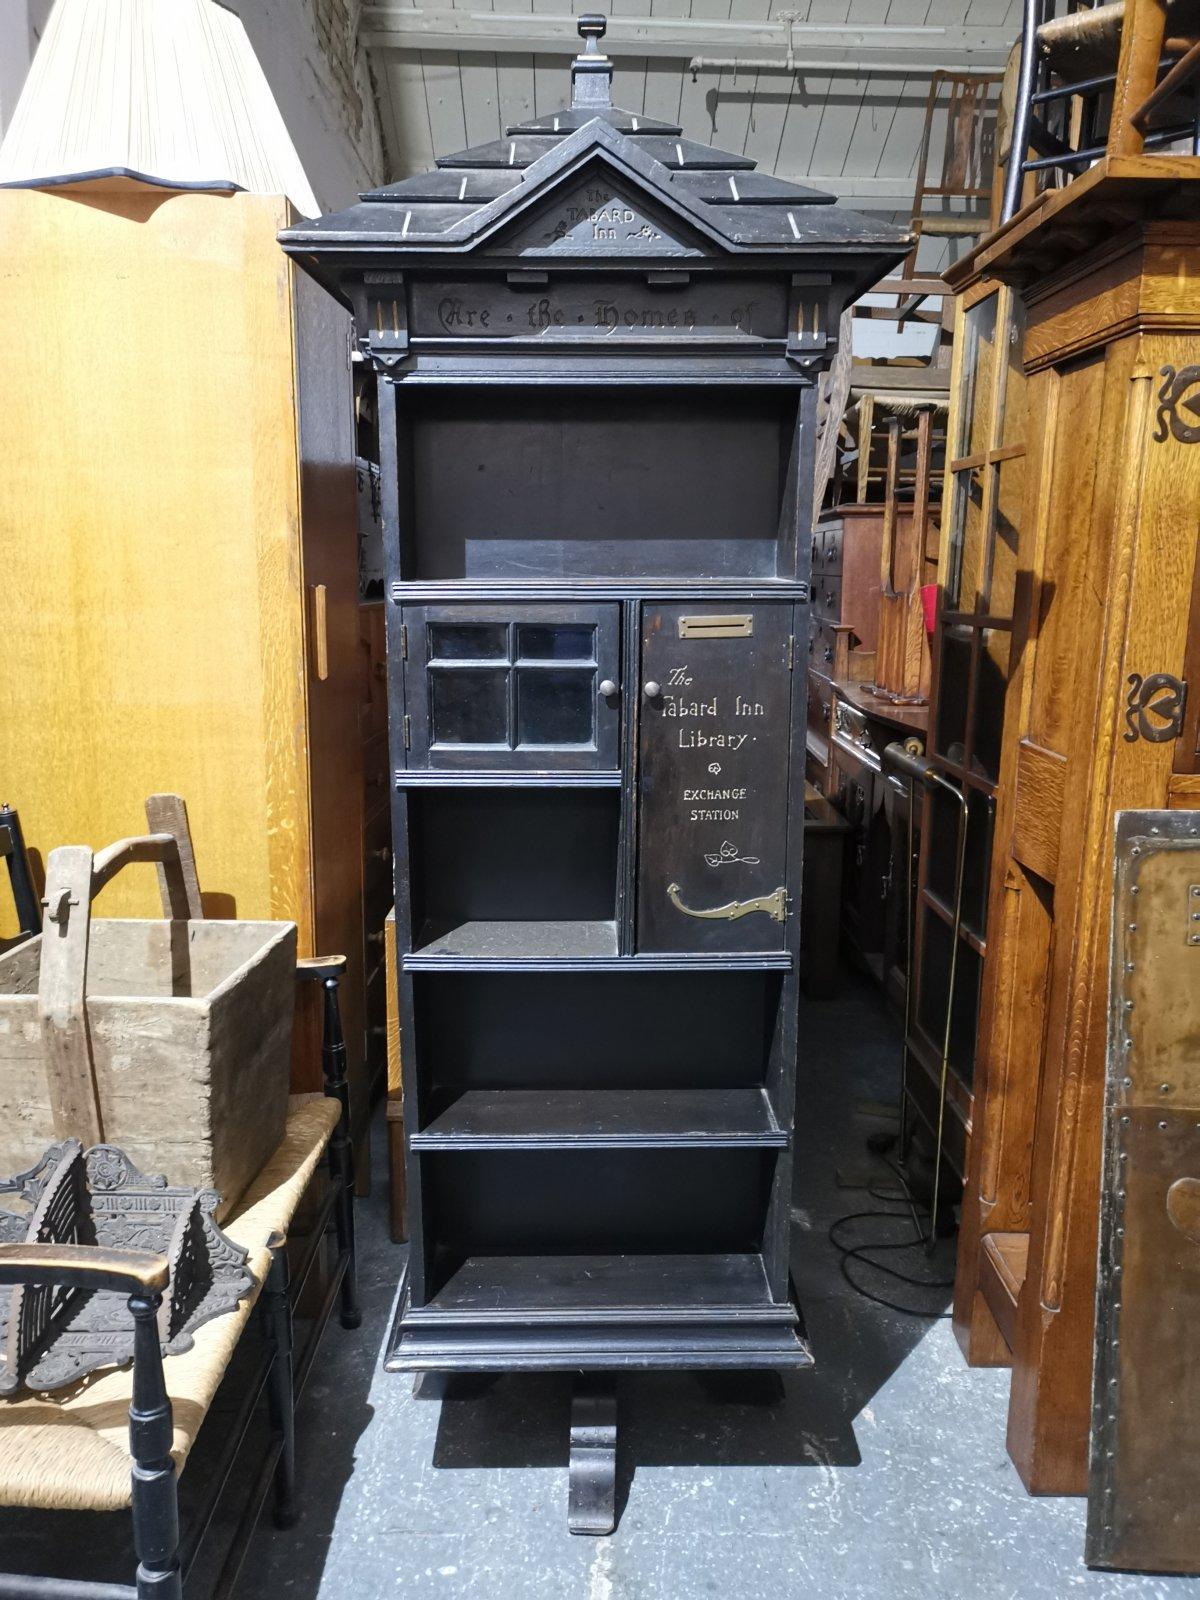 Seymour Easton. A Gothic Revival Ebonized Tabard Inn Library Revolving Bookcase. For Sale 1